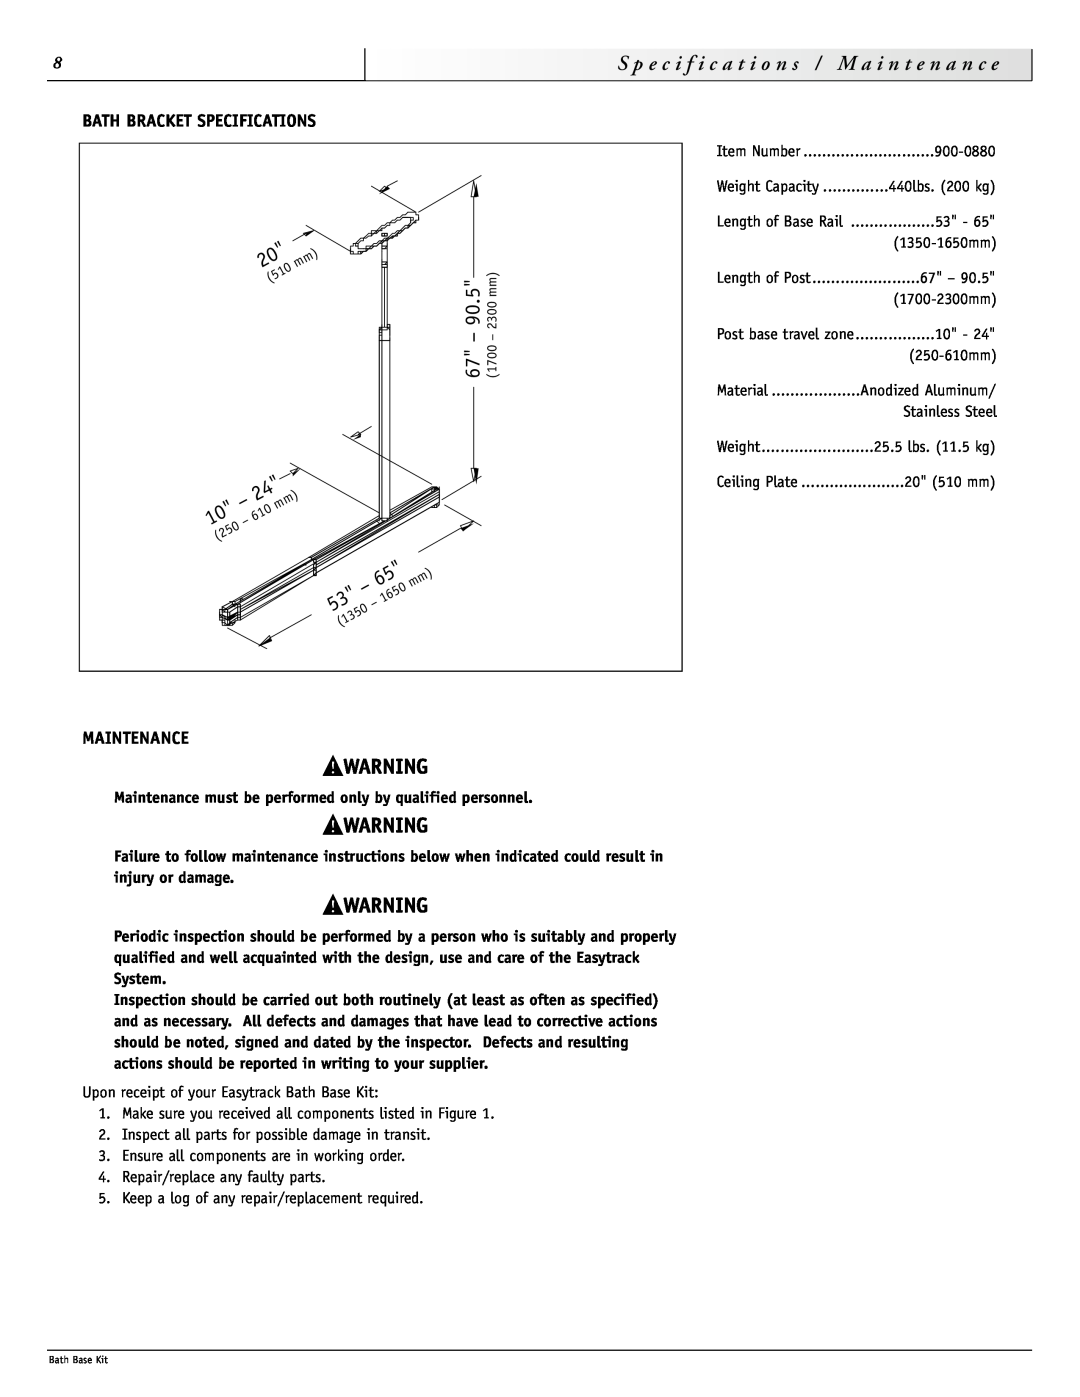 Sunrise Medical 900-0880 instruction manual Bath Bracket Specifications, Maintenance, 90.5, 20 mm, 65 mm 